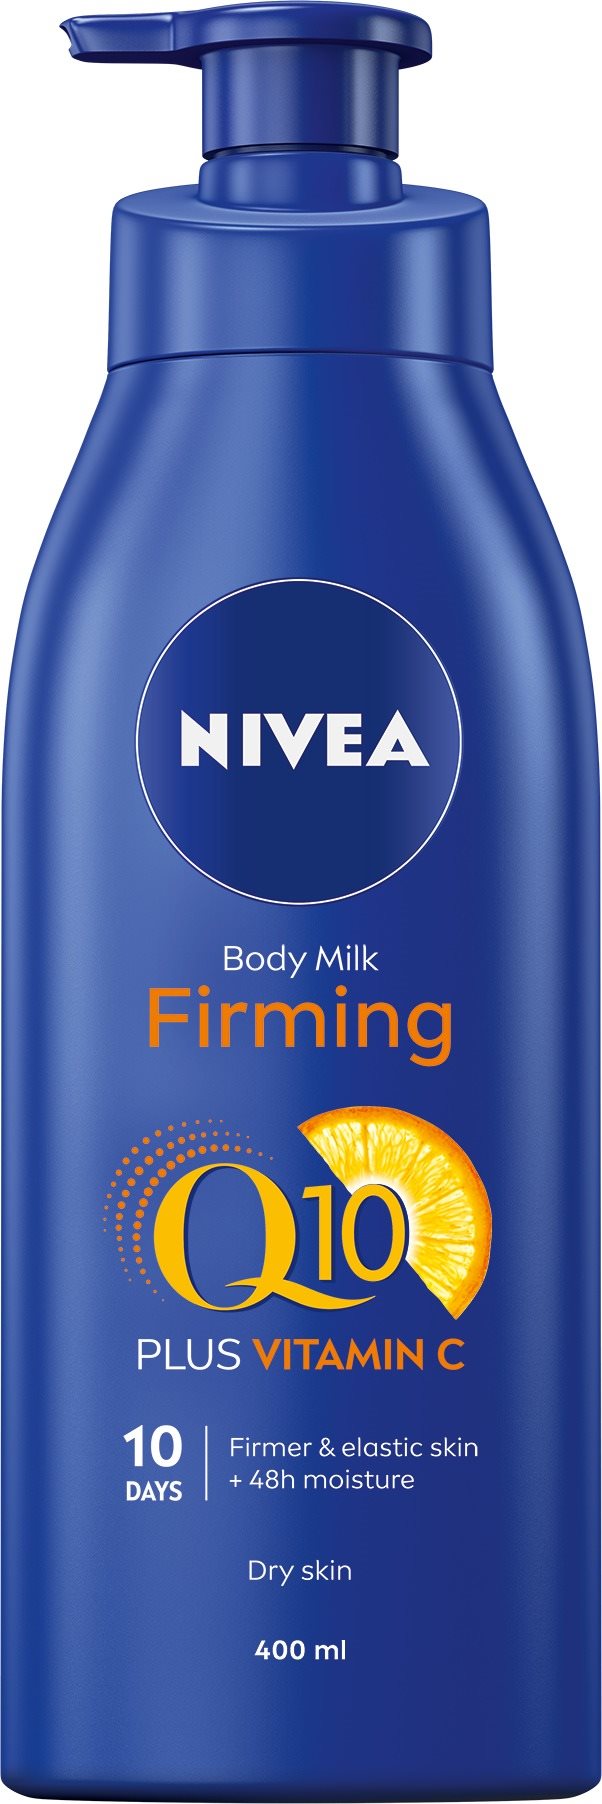 NIVEA Firming Body Lotion Dry Skin Q10 Plus 400 ml